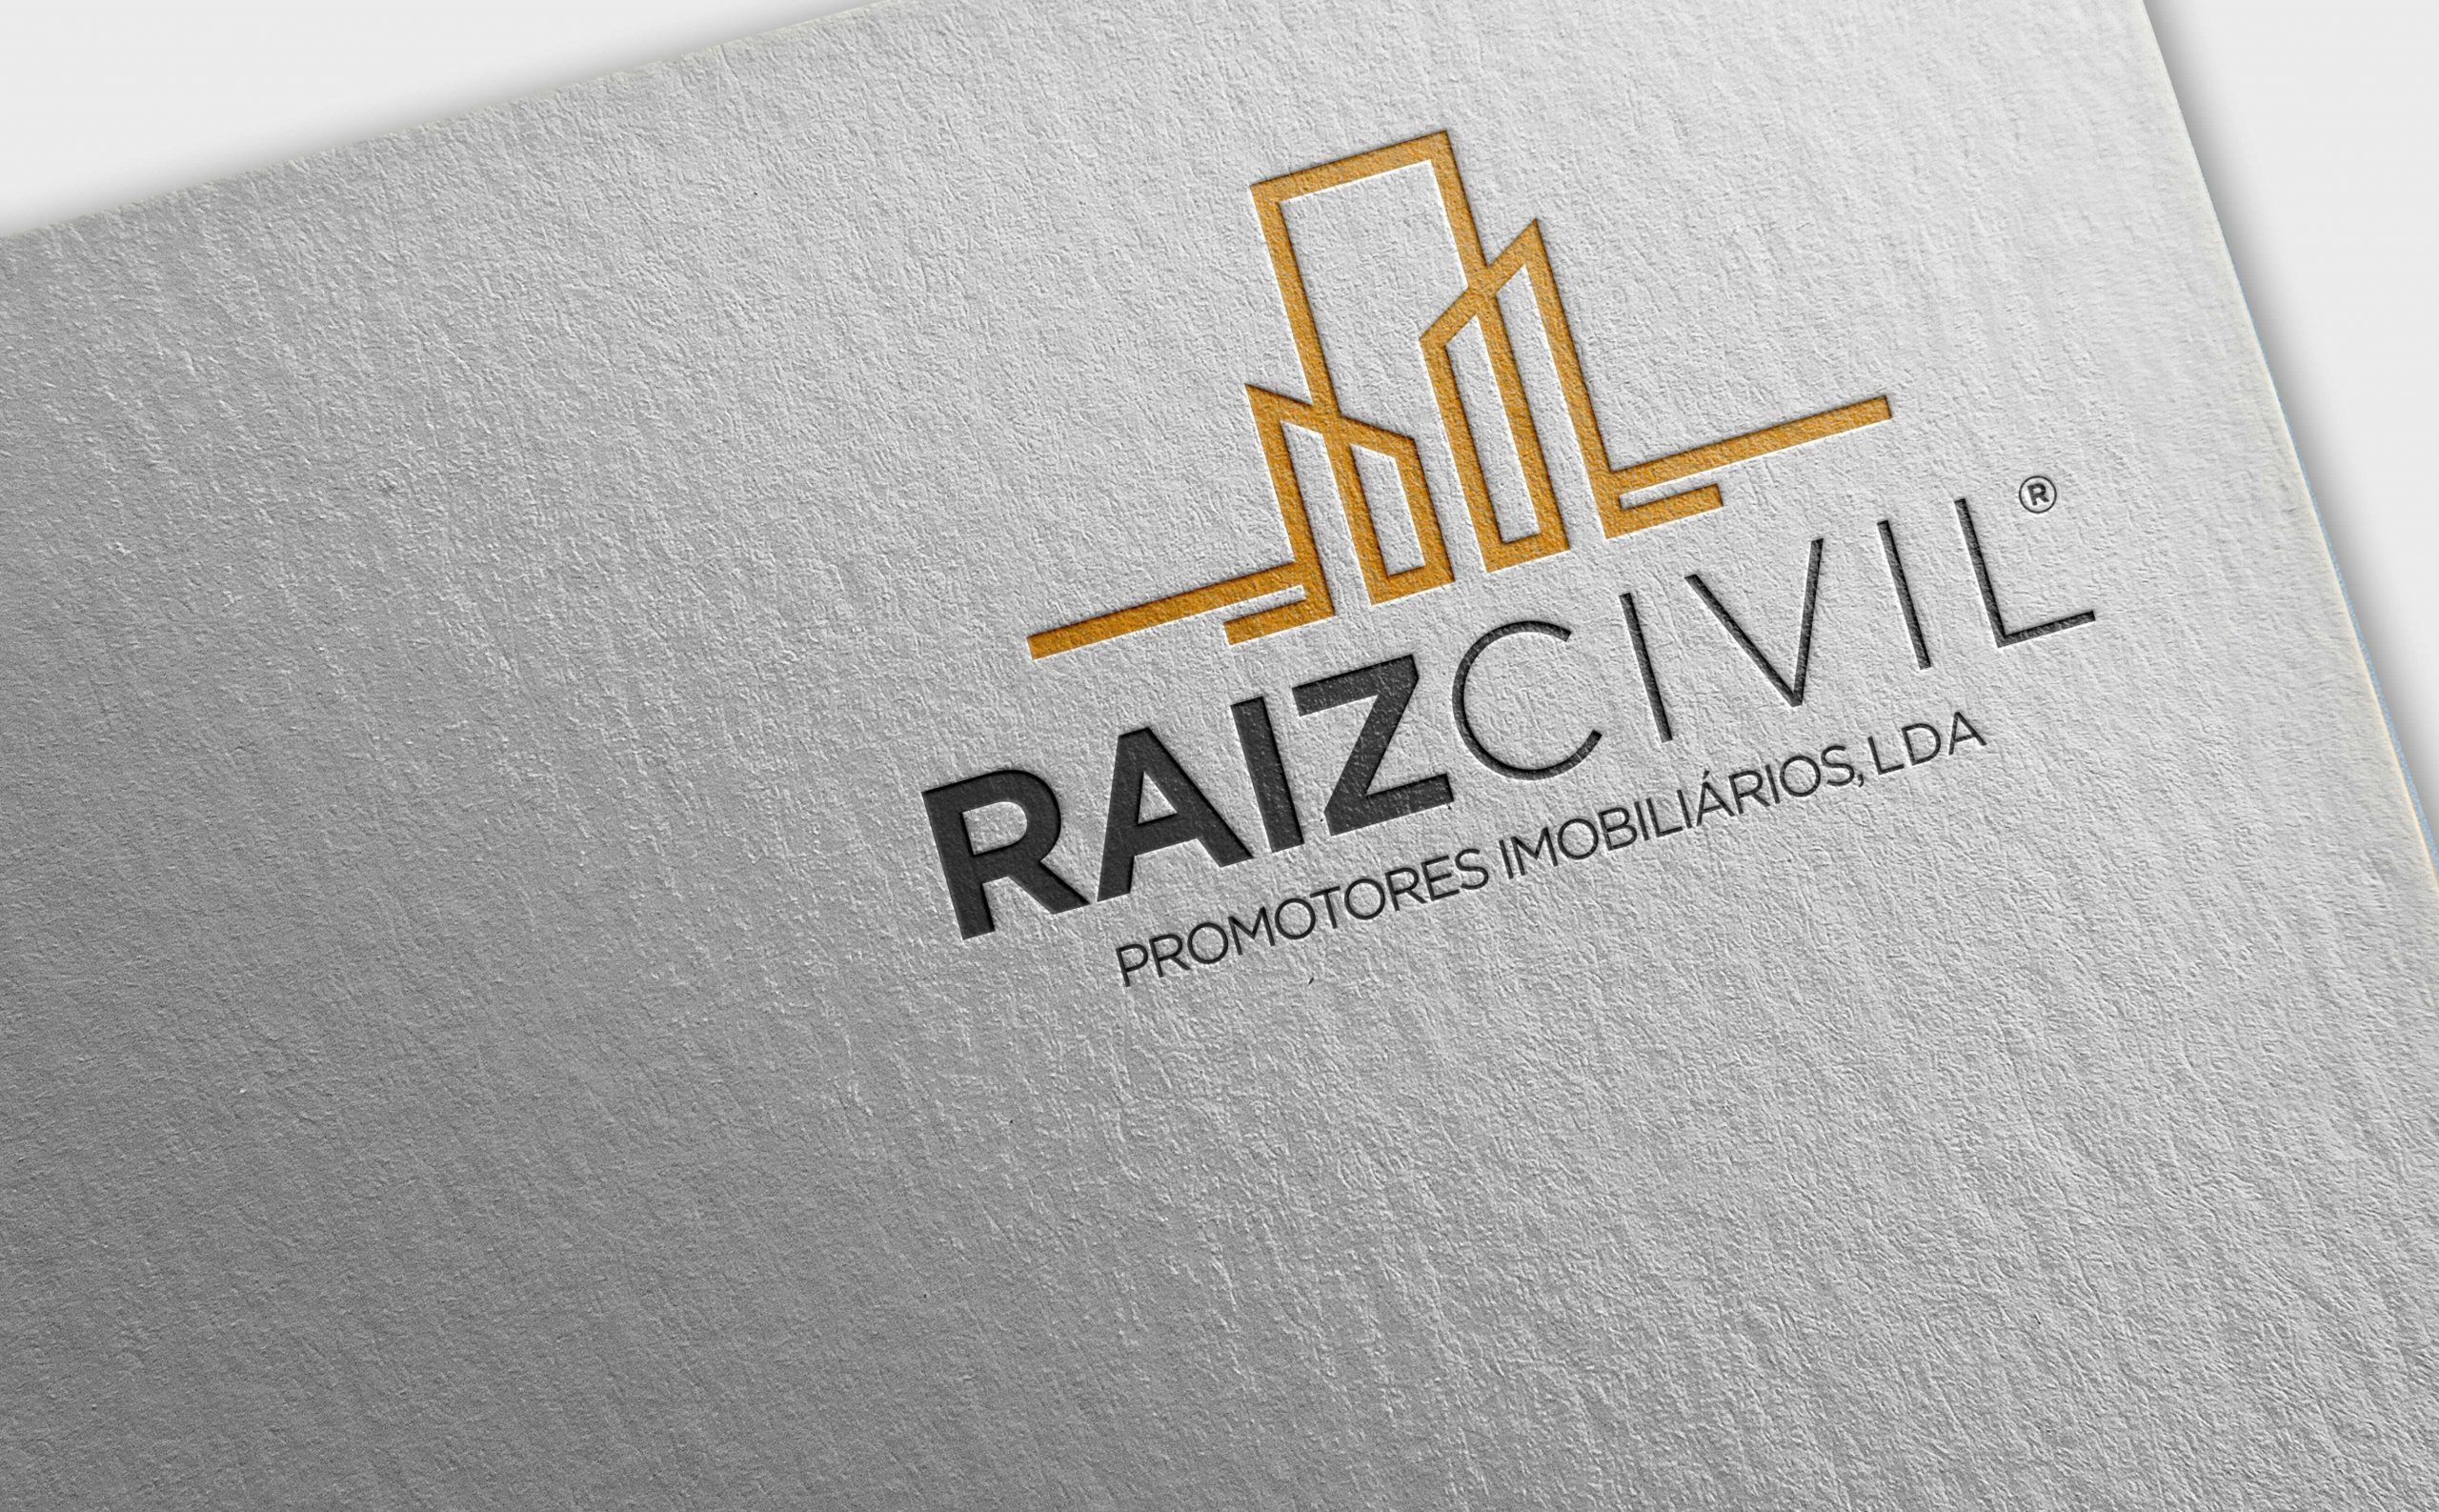 raiz civil projeto Portfolio 2